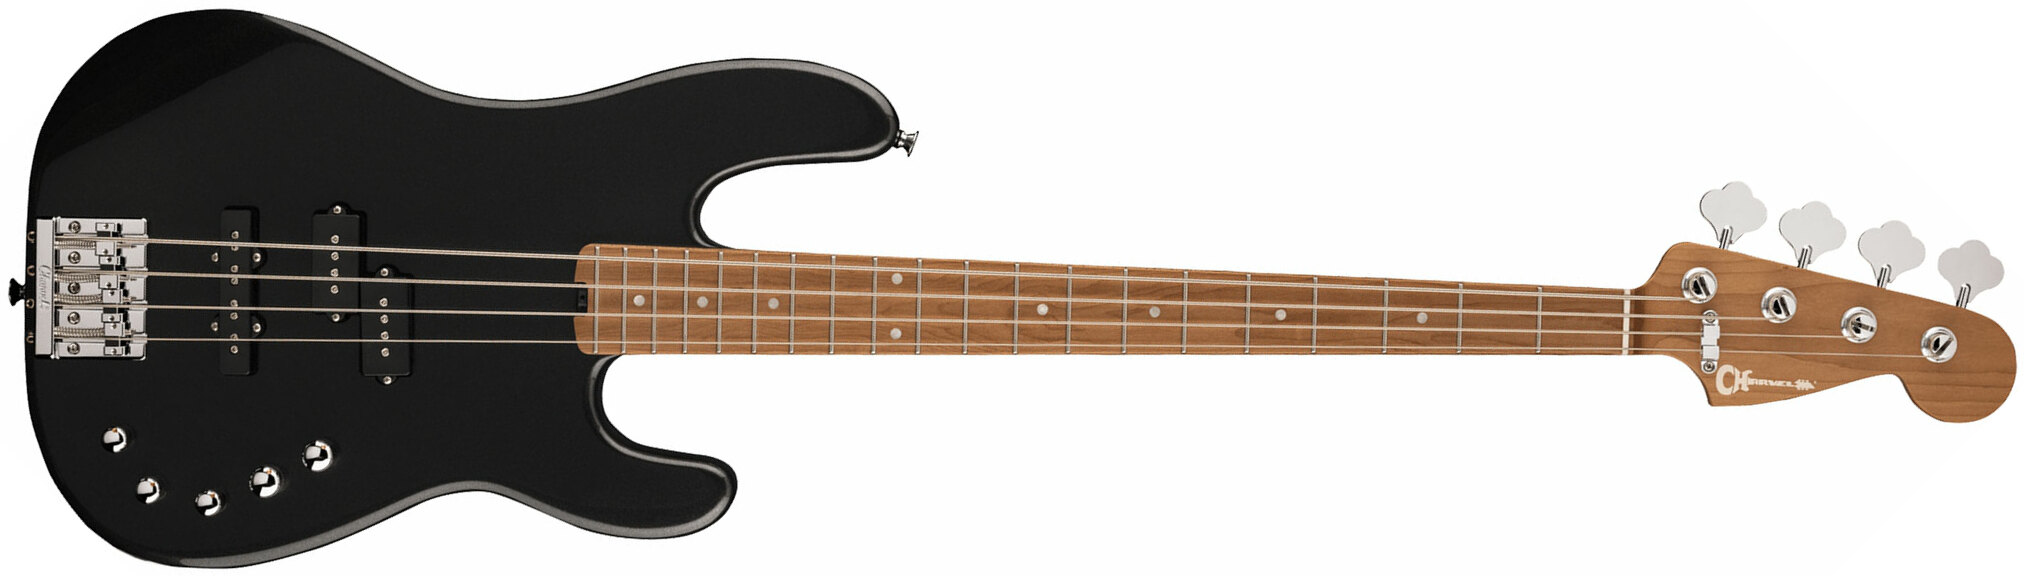 Charvel San Dimas Bass Pj Iv Pro-mod Mex 4c Active Mn - Metallic Black - Solid body electric bass - Main picture